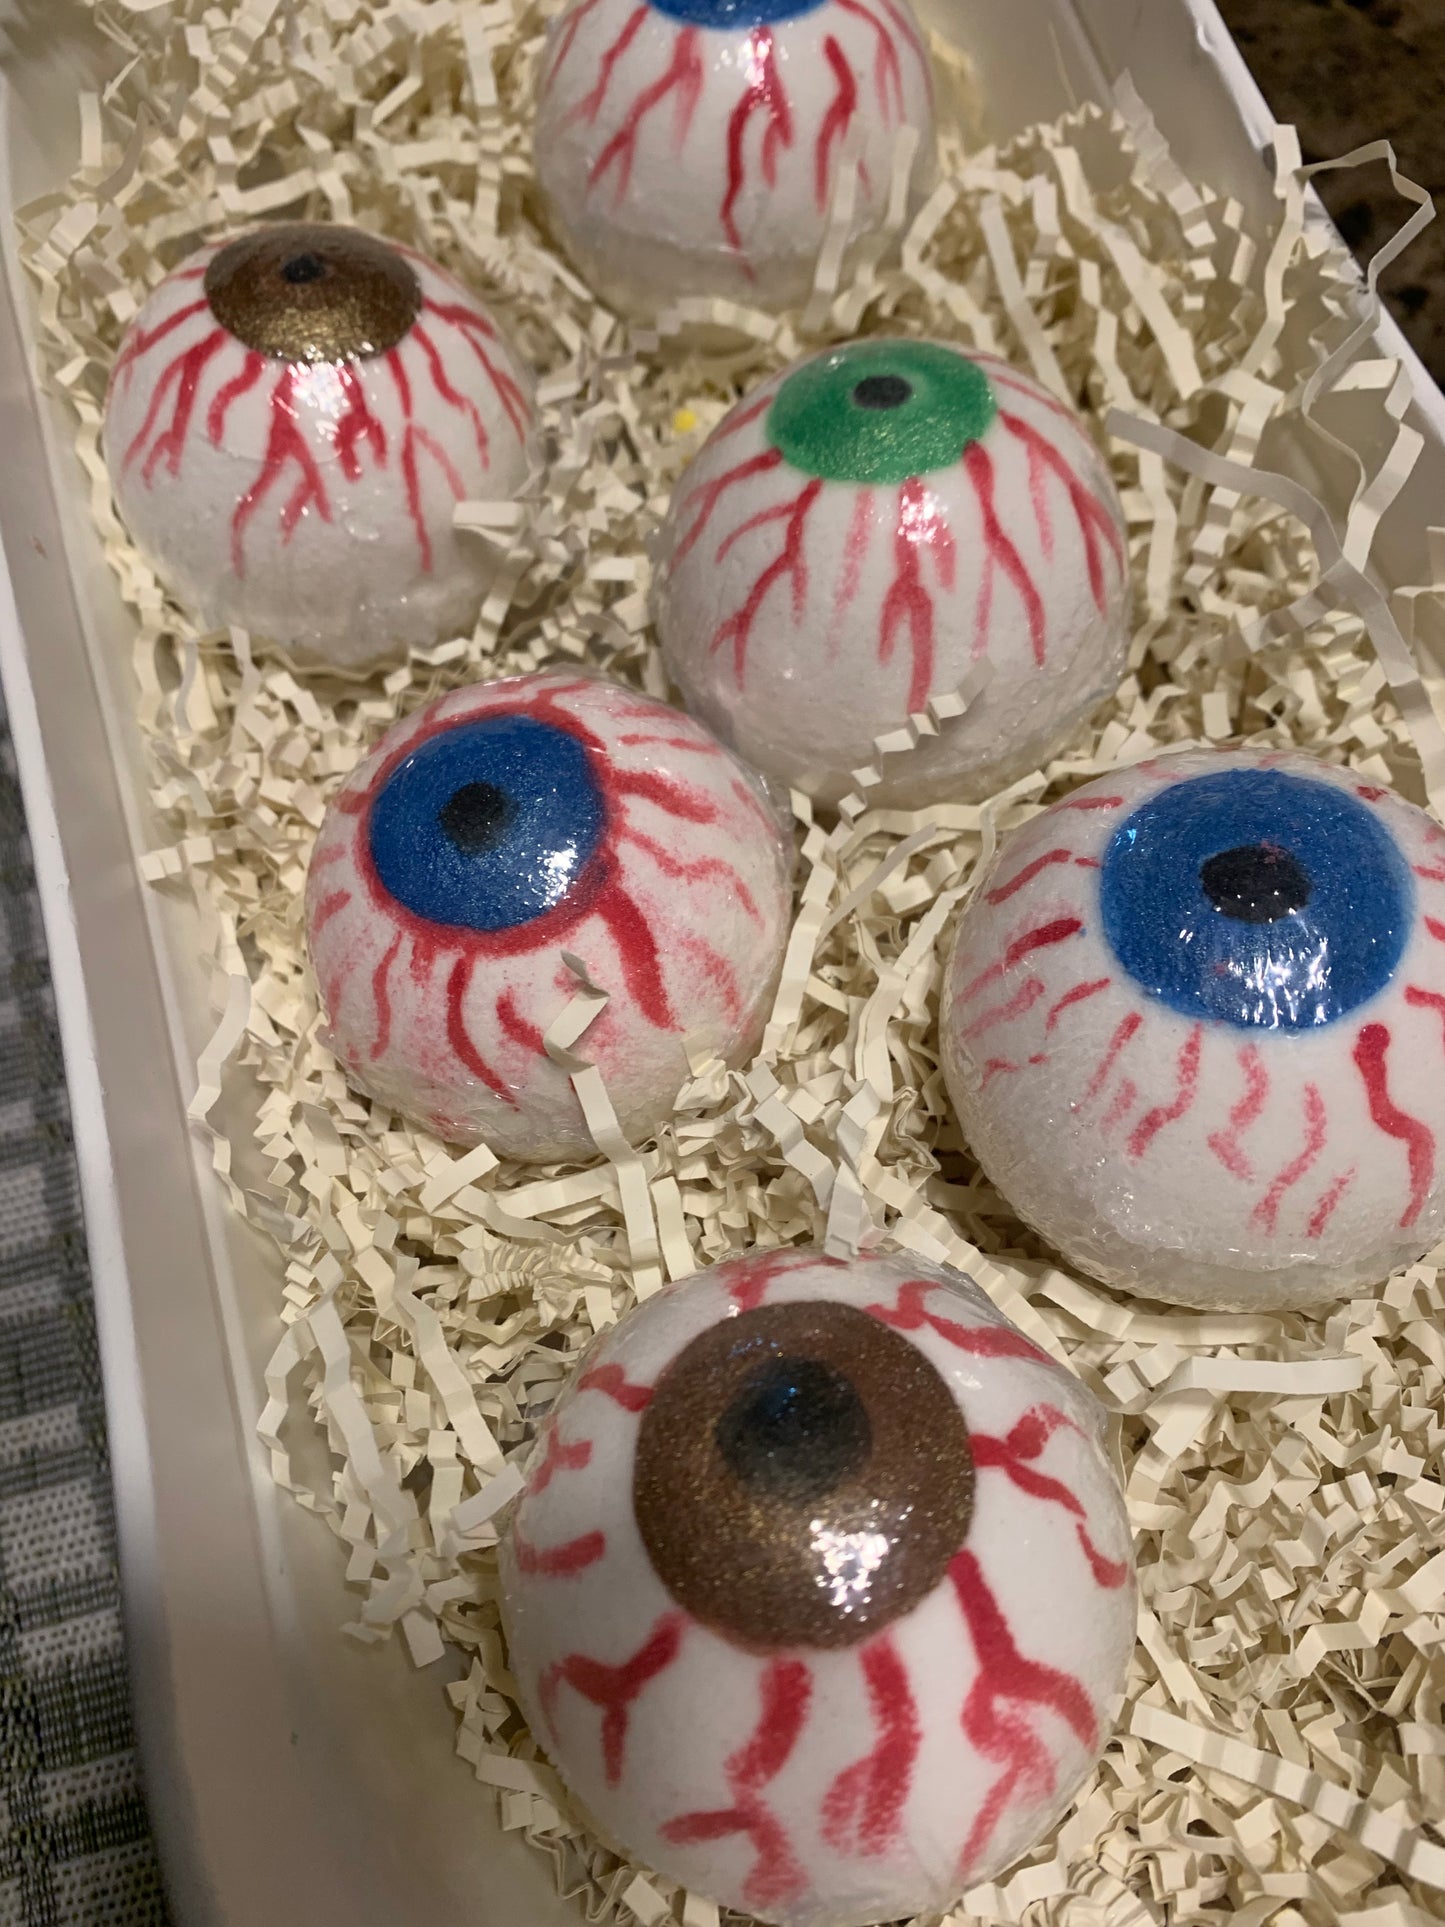 Cyclops Spooky Eyeball Bath Bomb